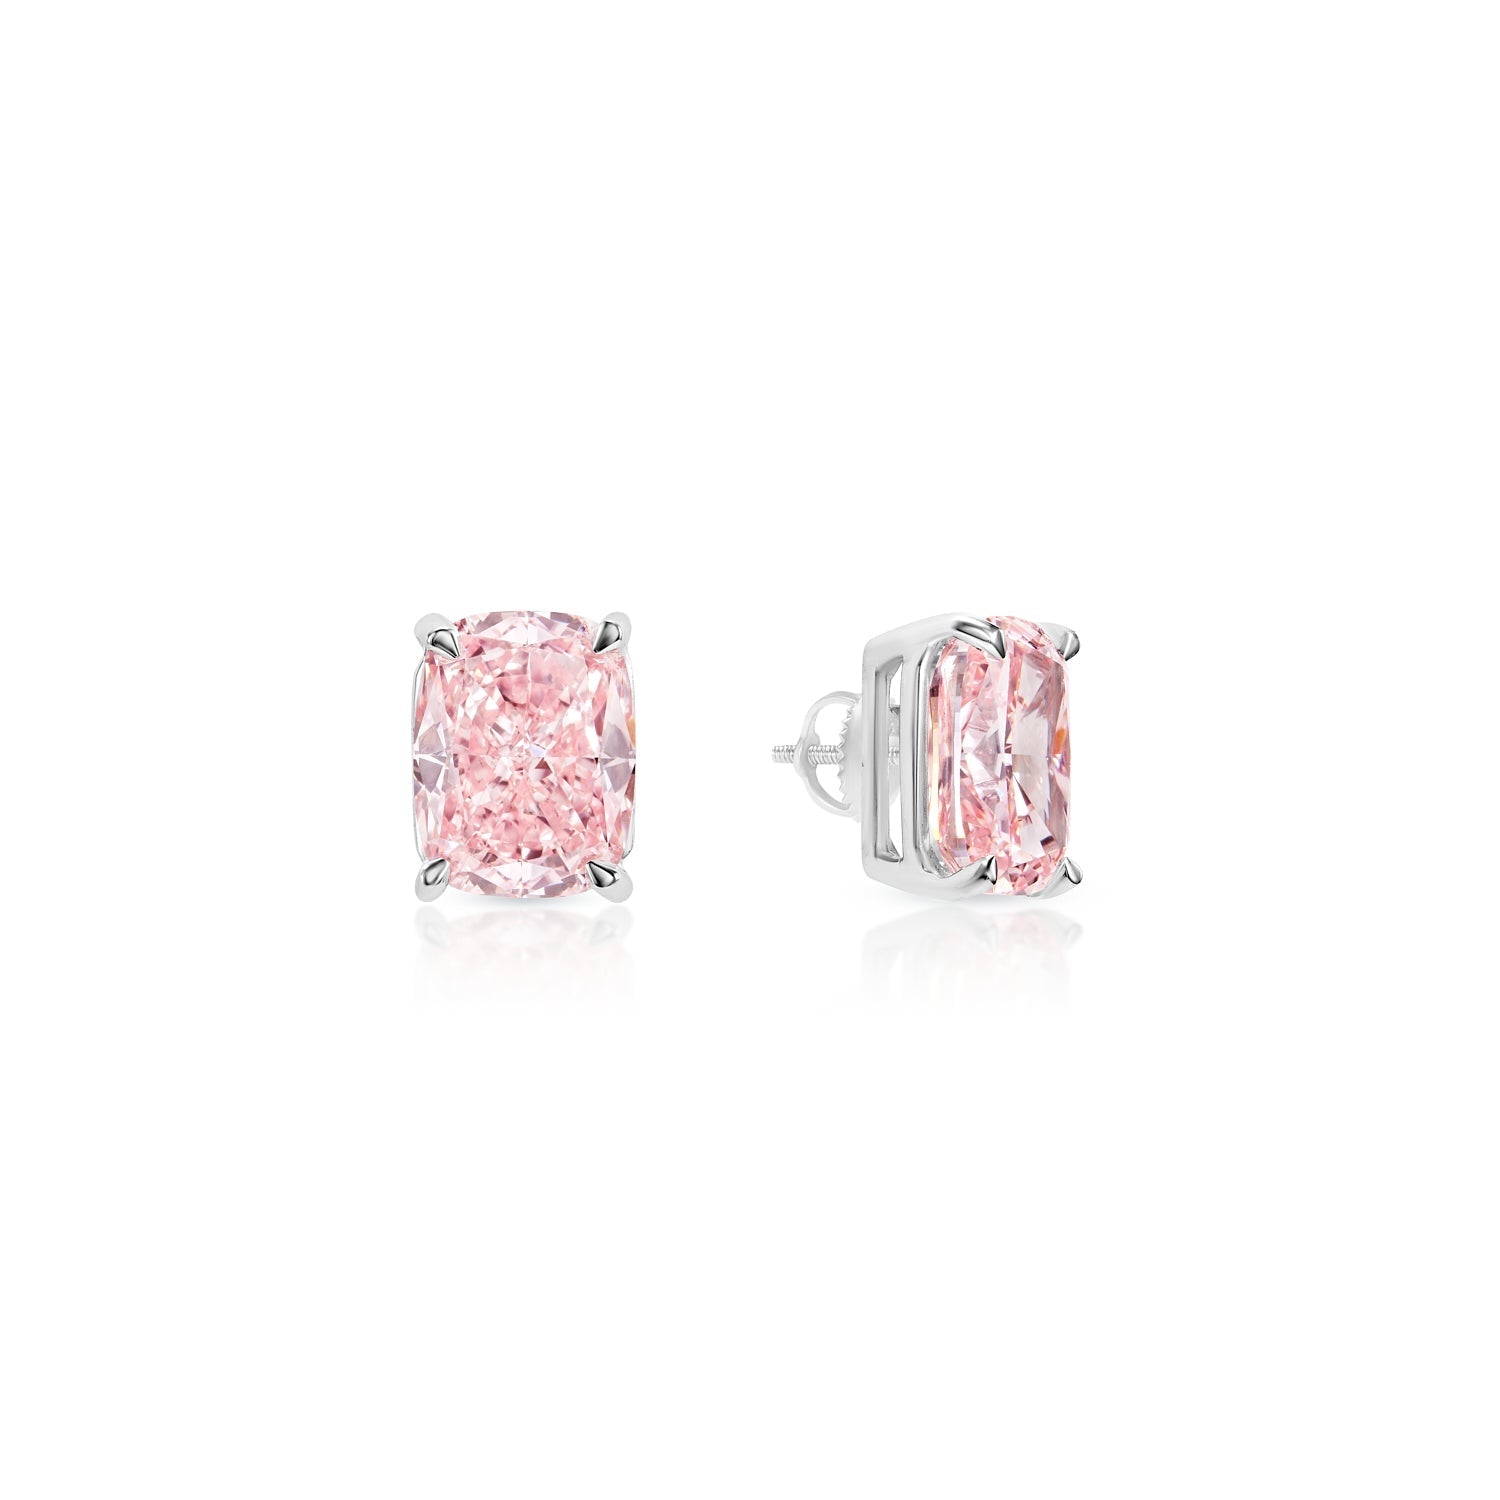 Haisley 5 Carat VVS1 Fancy Vivid Pink Cushion Cut Diamond Stud Earring